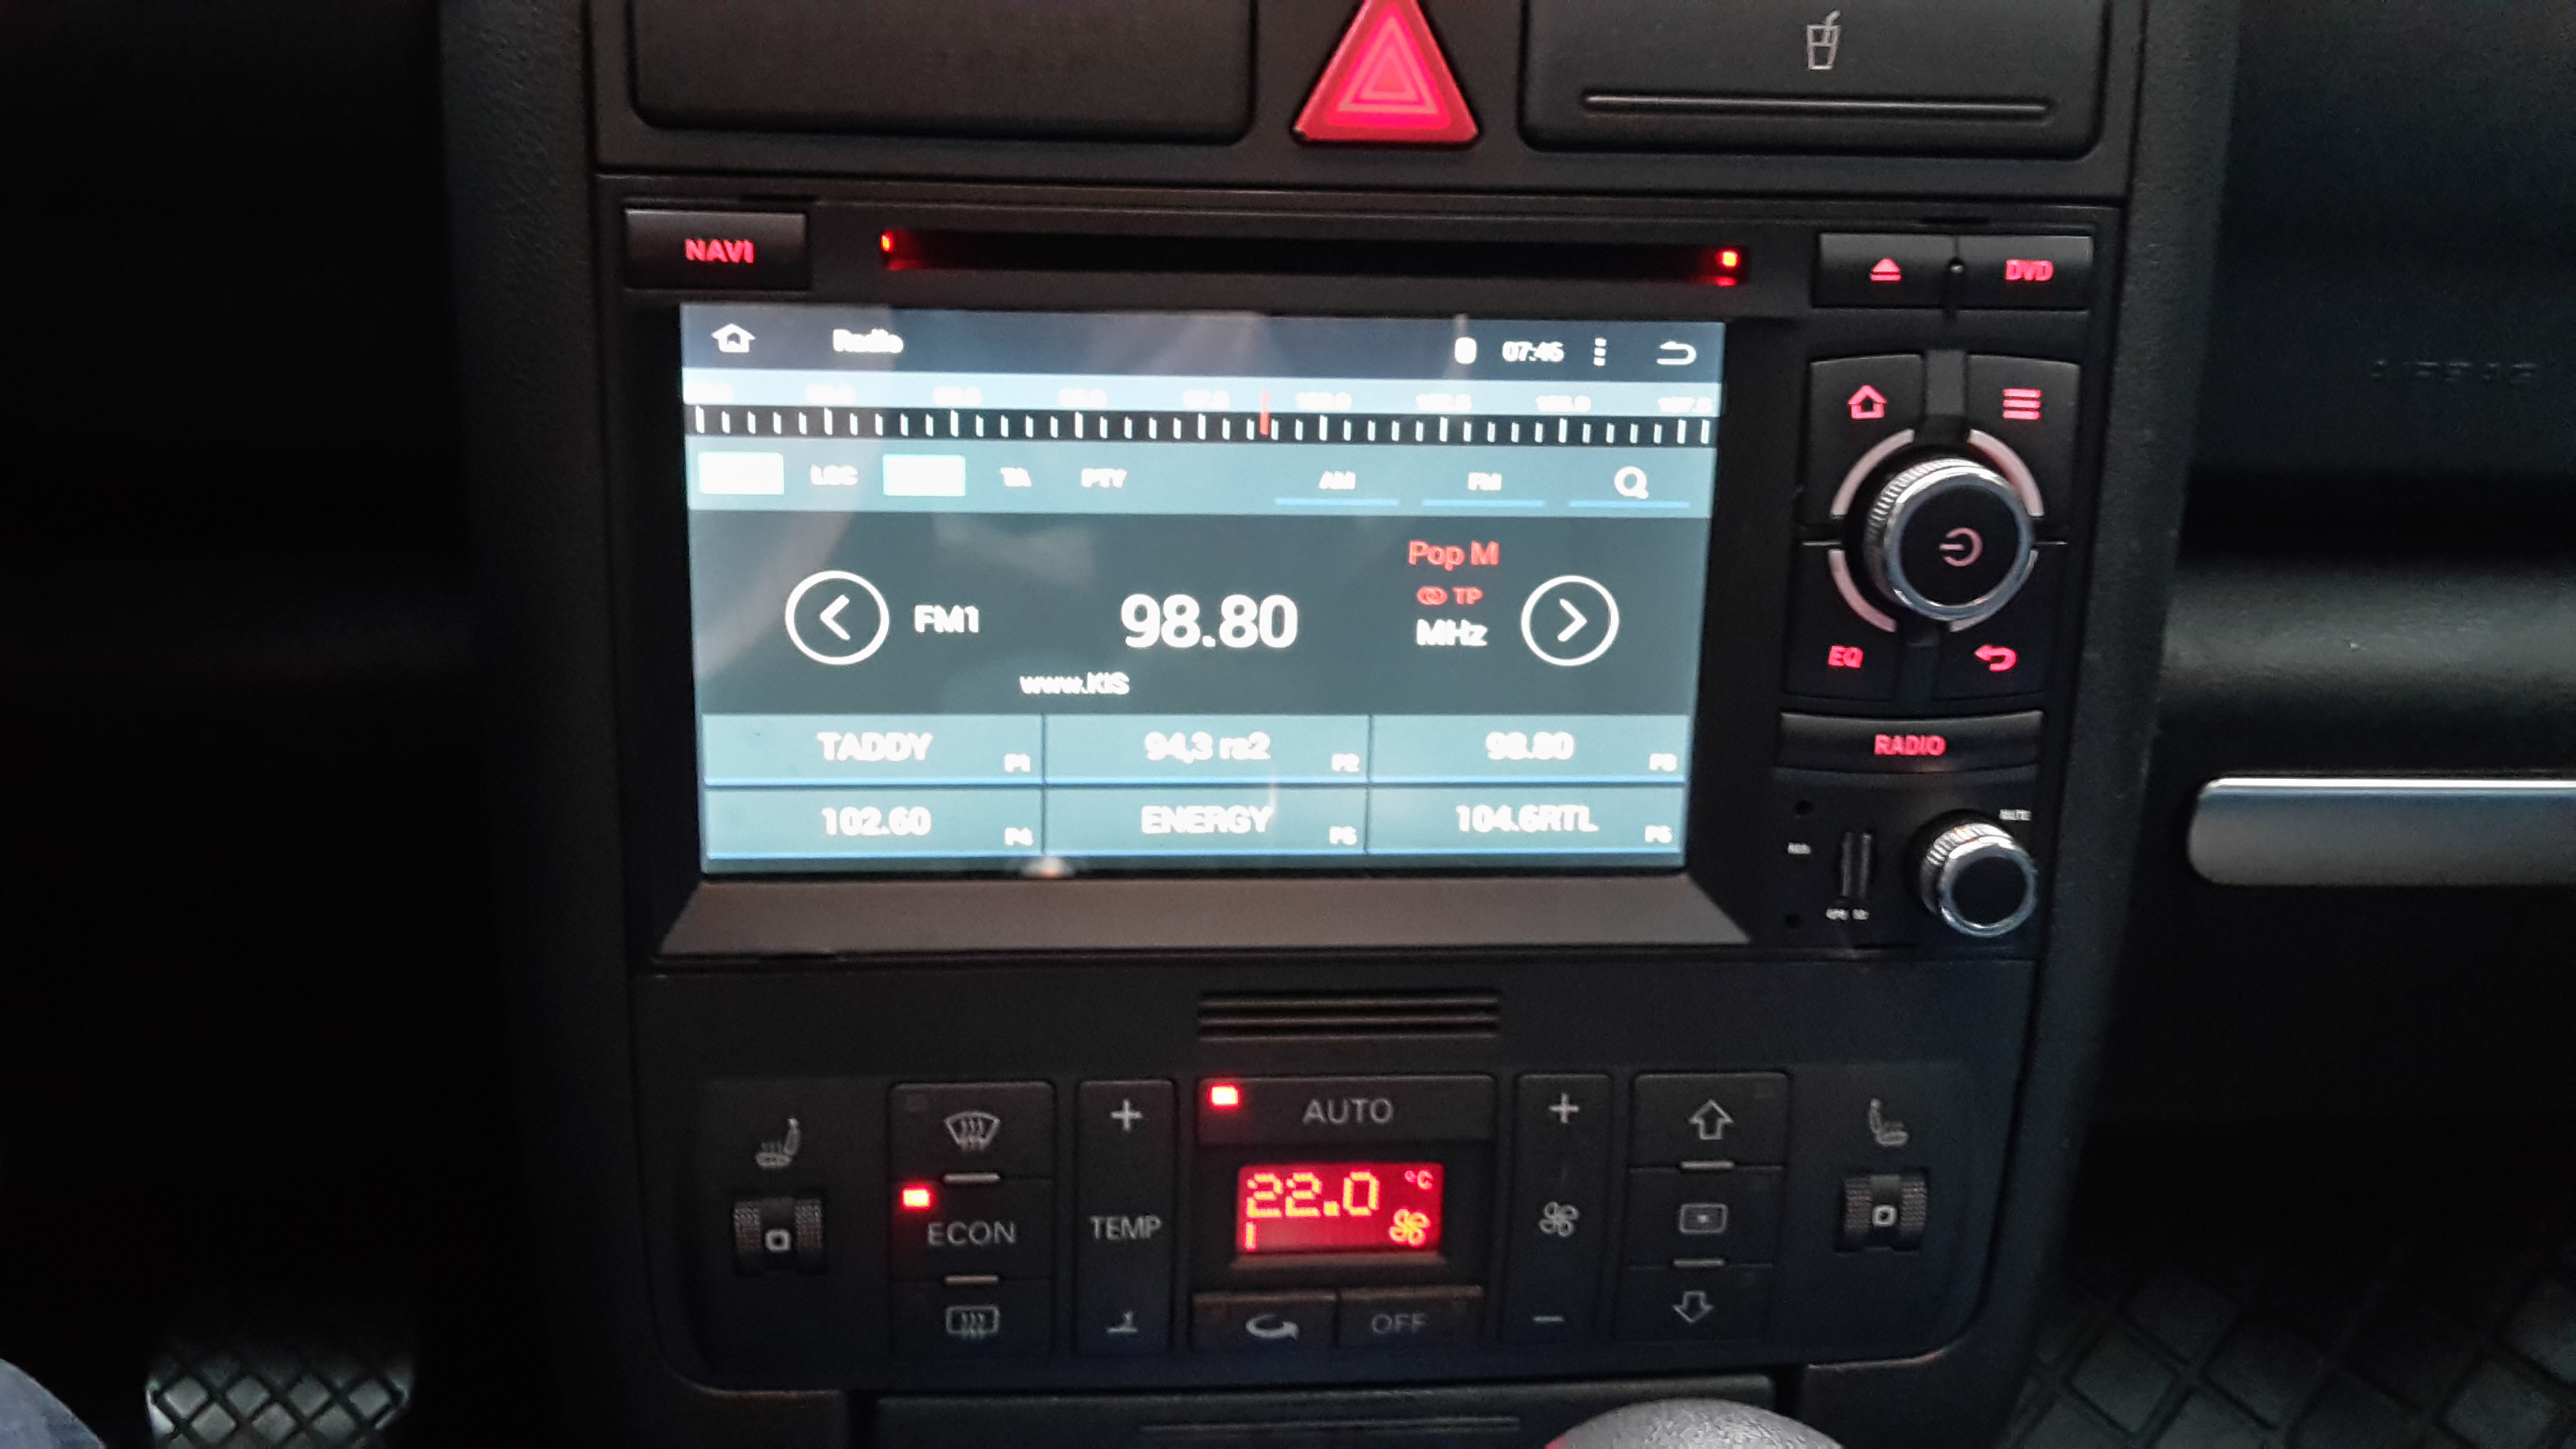 Originalradio Audi Concert 2 bringt keinen Ton raus - HIFI - Handy